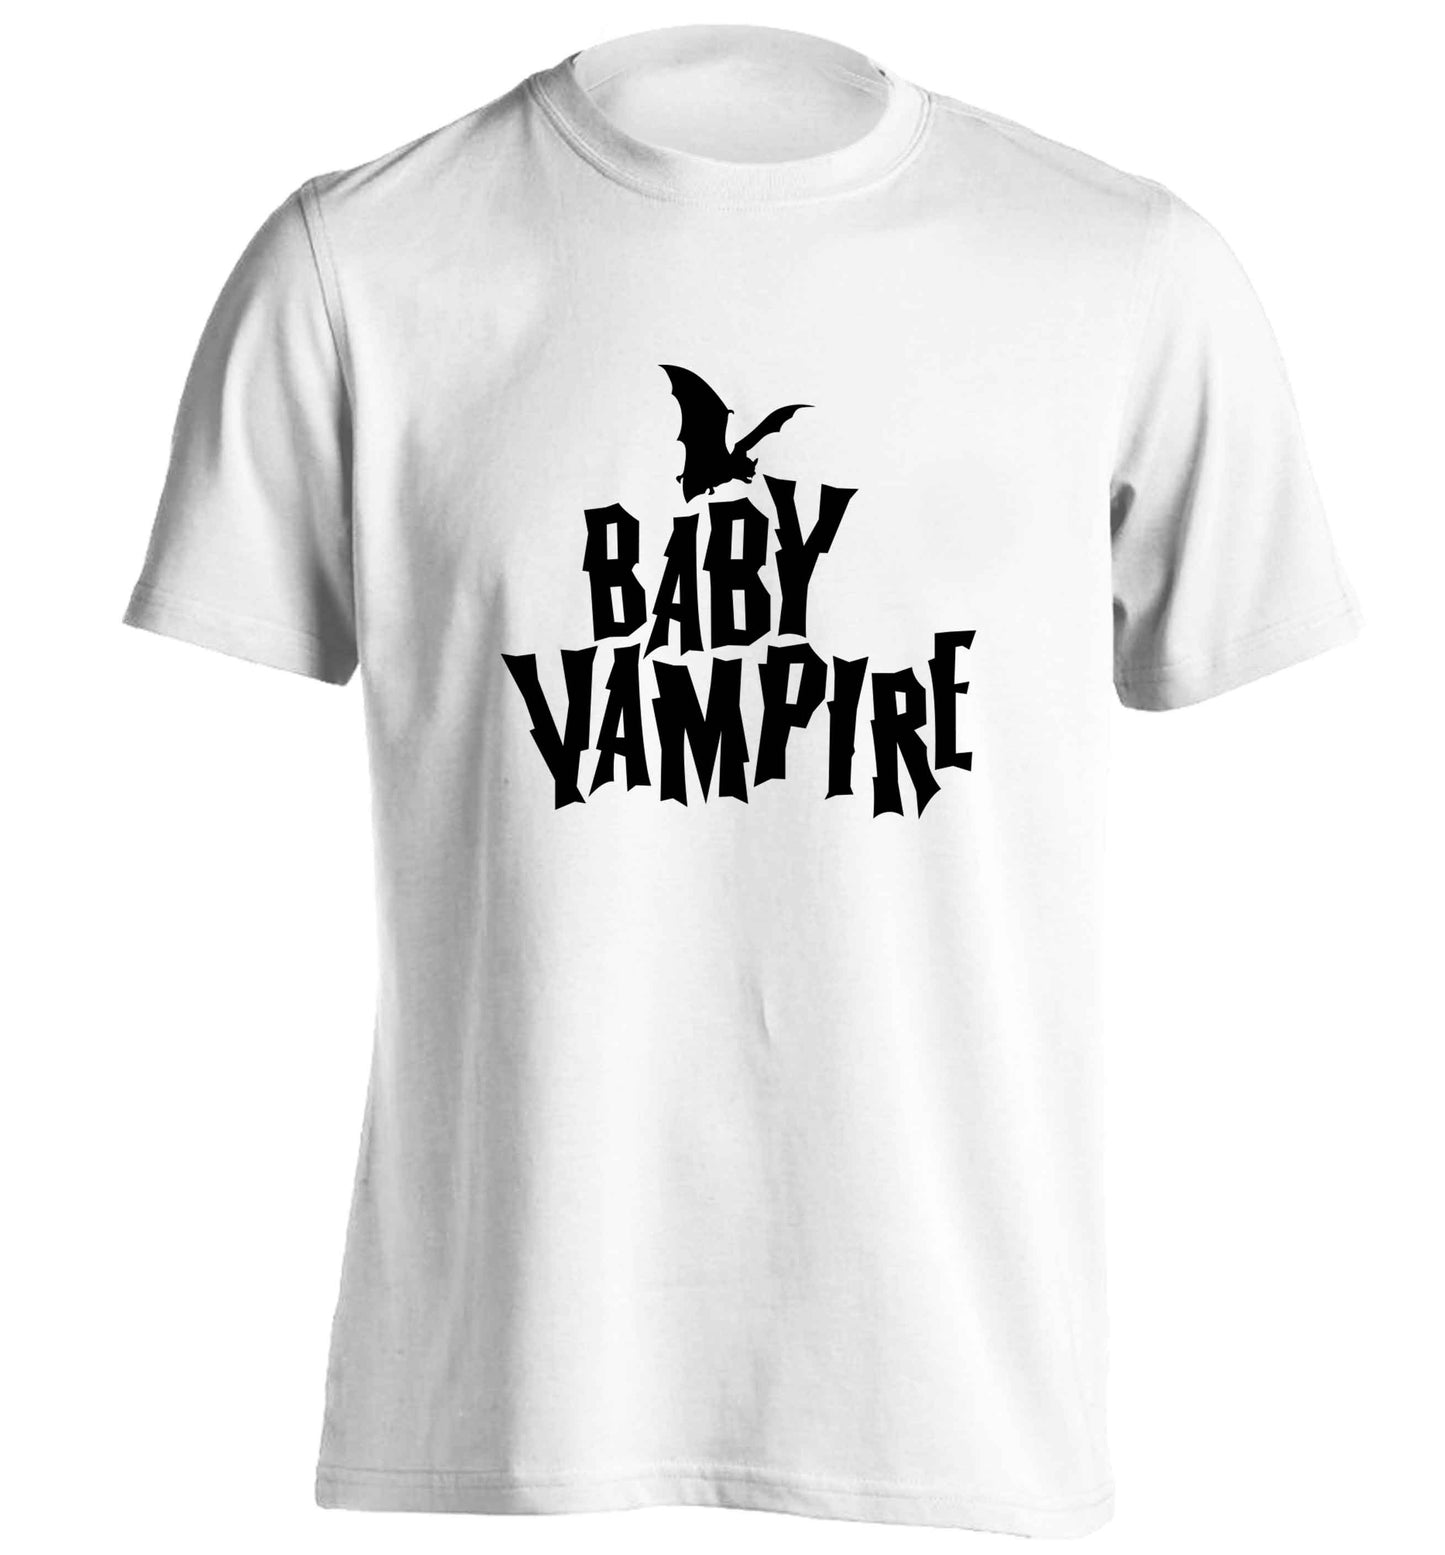 Baby vampire adults unisex white Tshirt 2XL